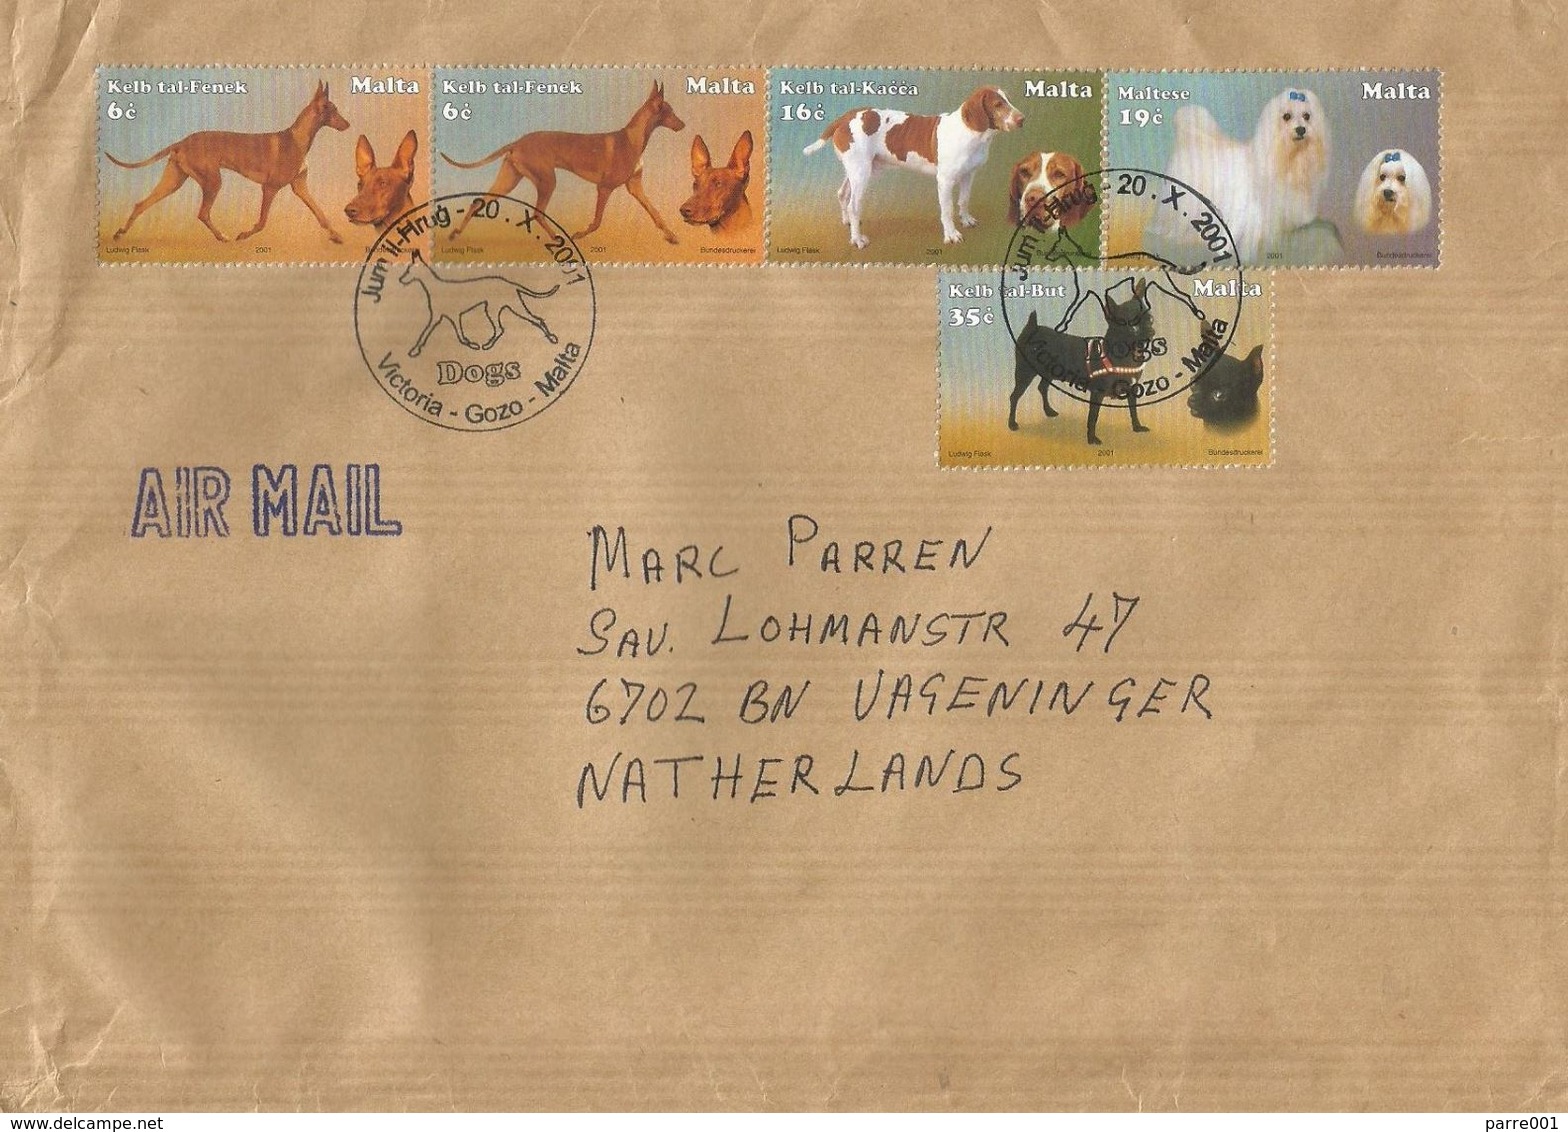 Malta 2001 Victoria Gozo Maltese Dogs FDC Postmark Cover - Hunde